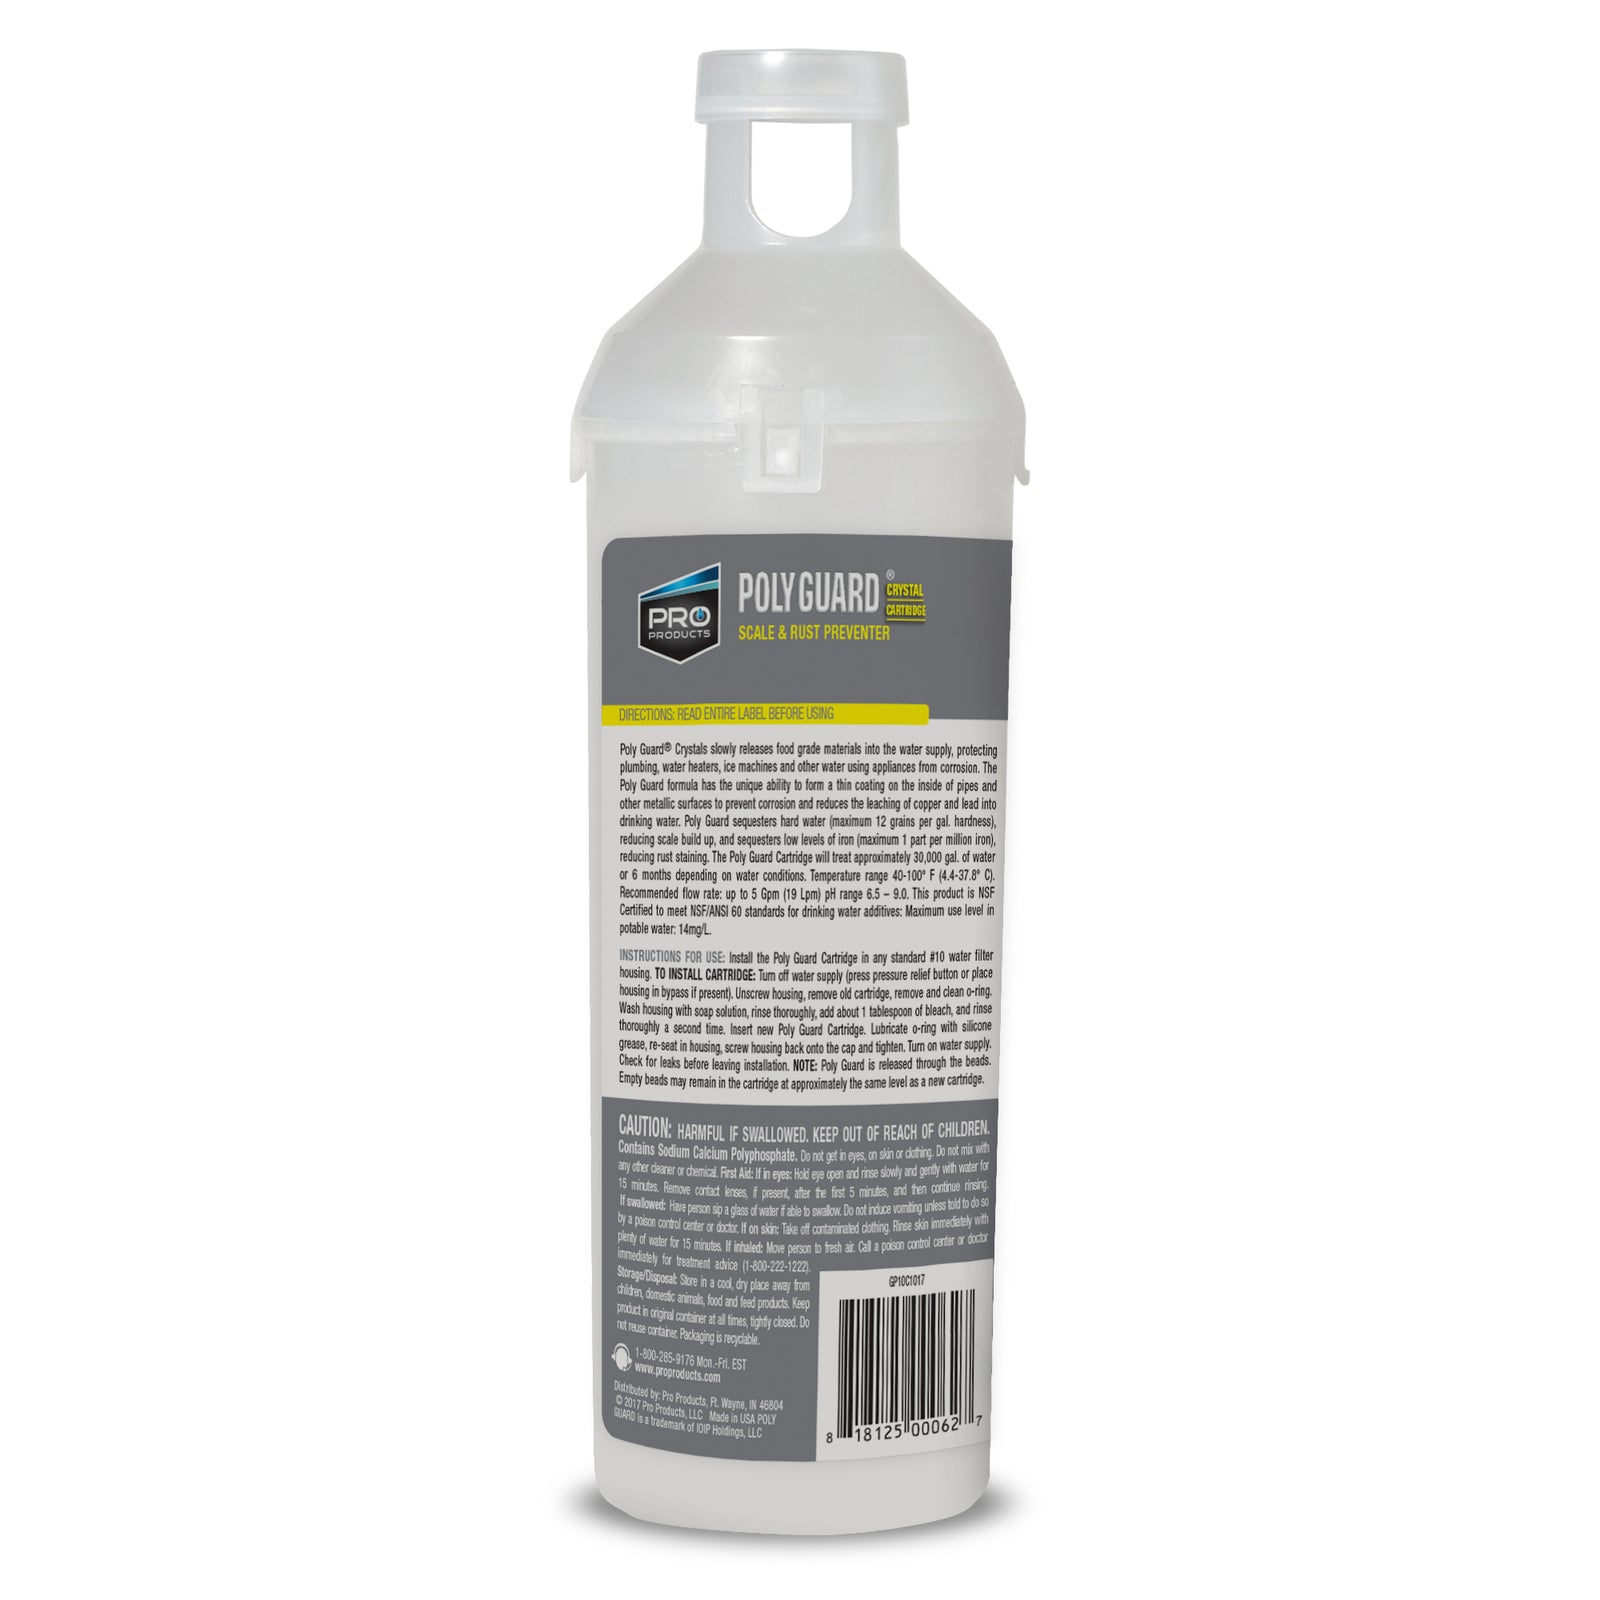 Pro Ban-T Citric Acid Resin Cleaner & pH Adjustment 45 lbs.